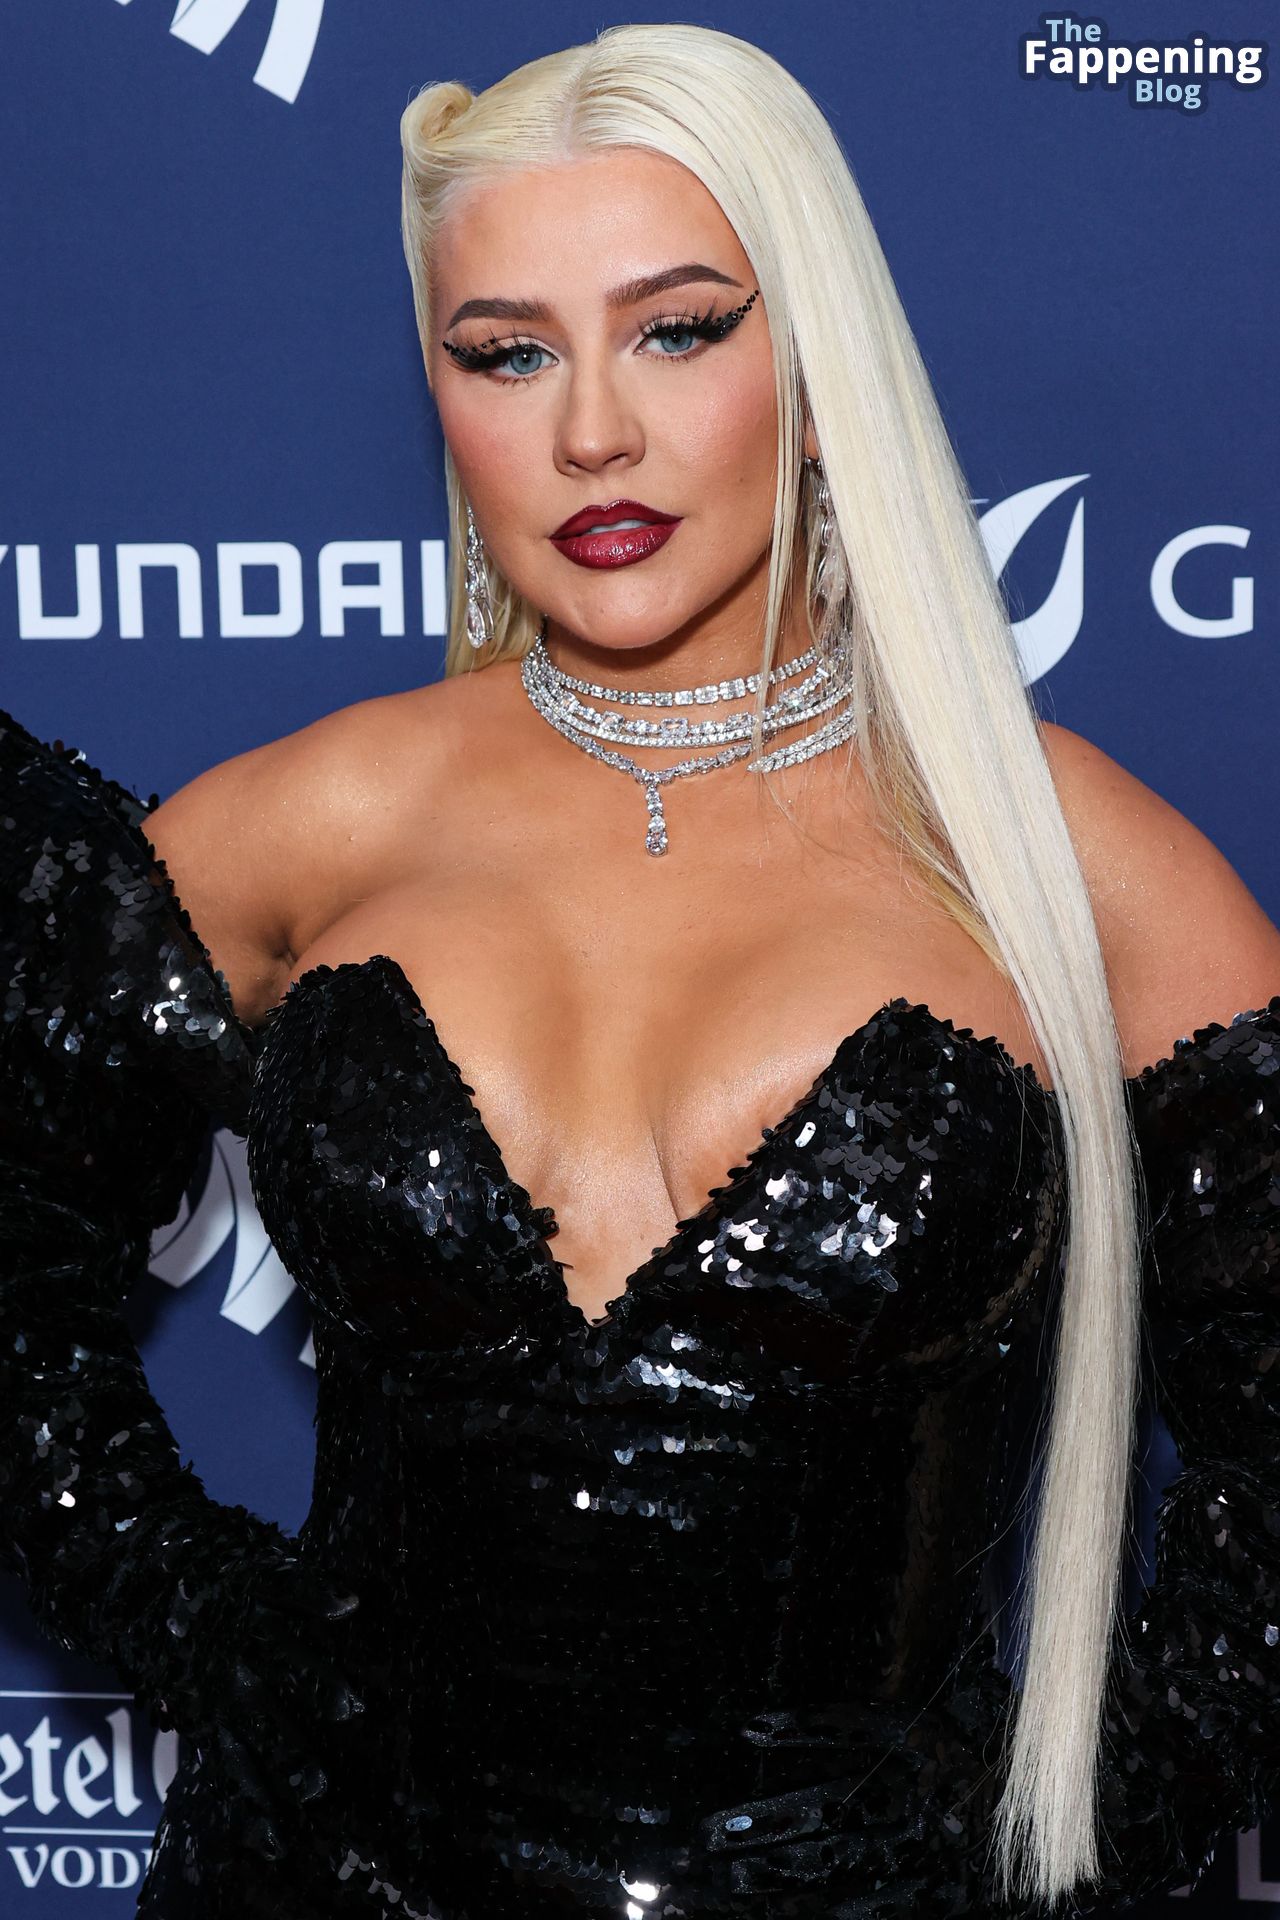 Christina-Aguilera-Sexy-The-Fappening-Blog-5.jpg